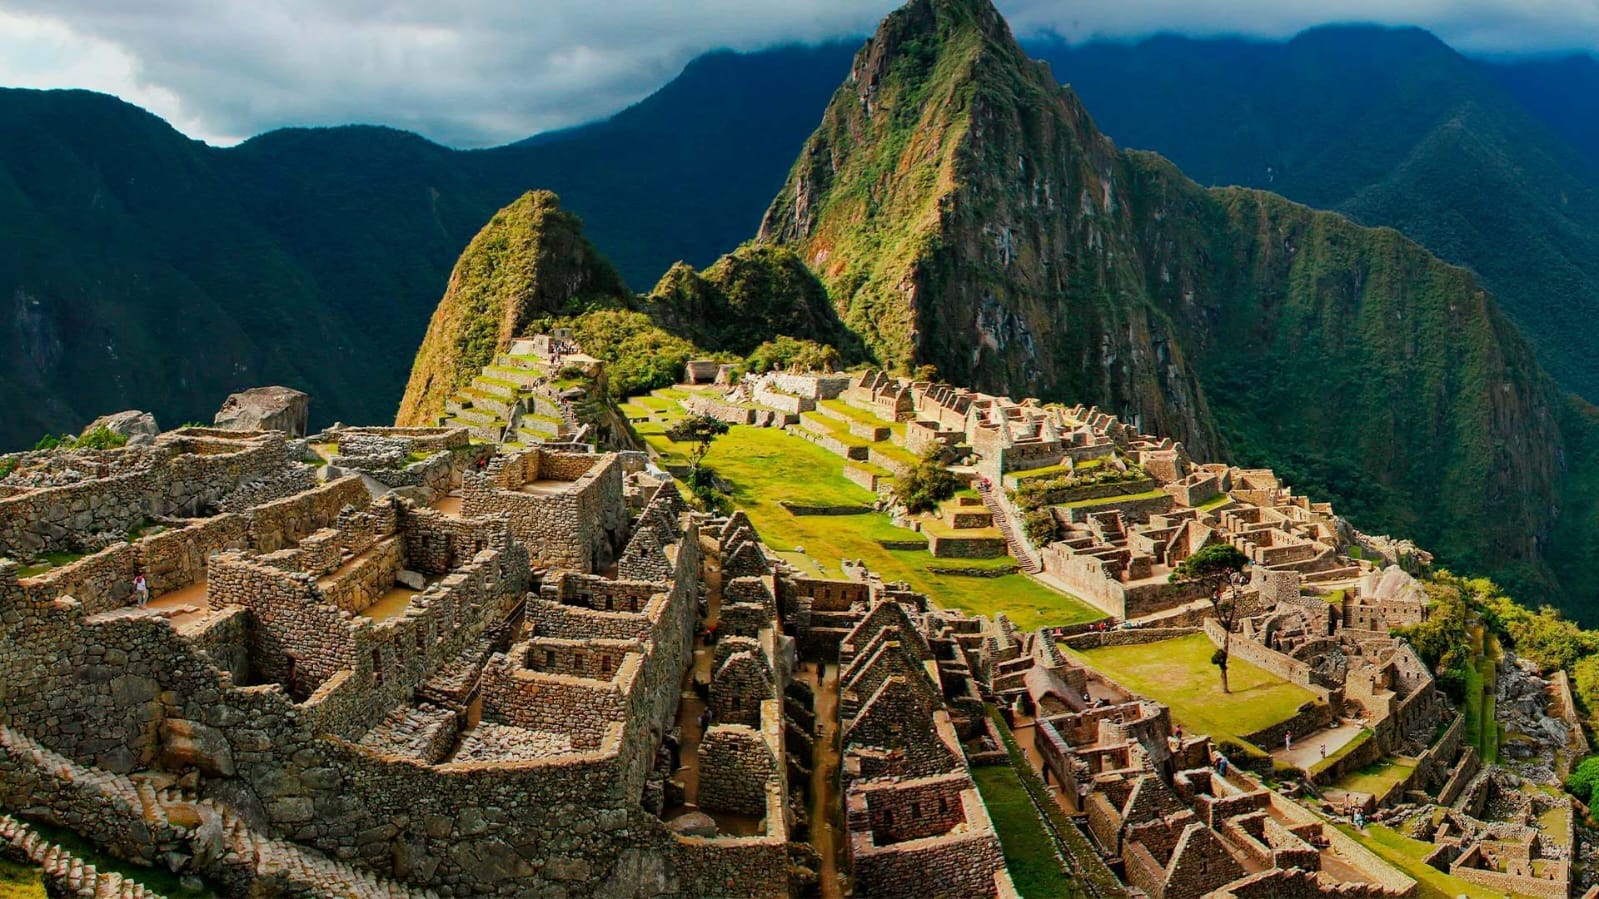 Machu Picchu is a 15th-century Inca citadel 